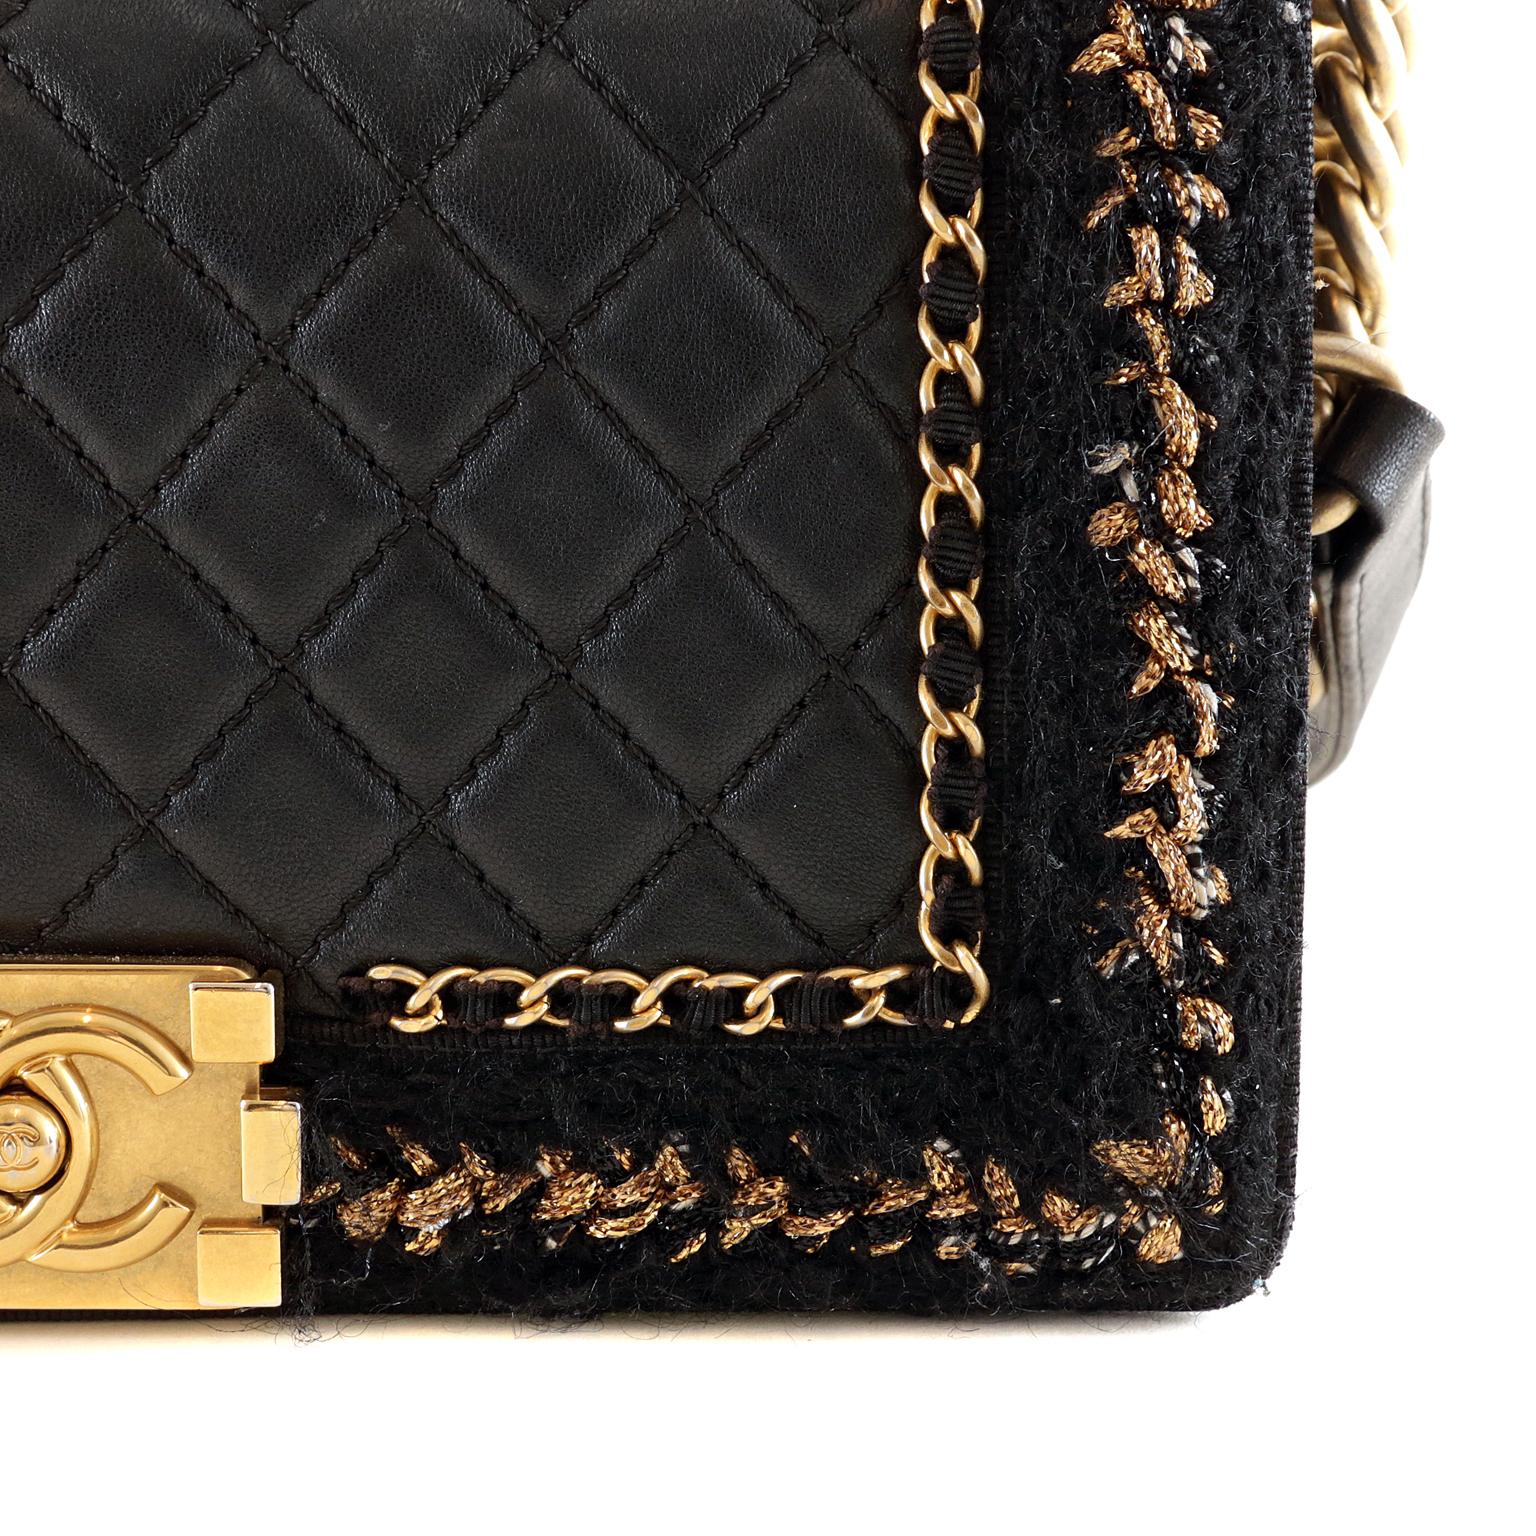 Chanel Black Leather and Boucle Medium Boy Bag 2